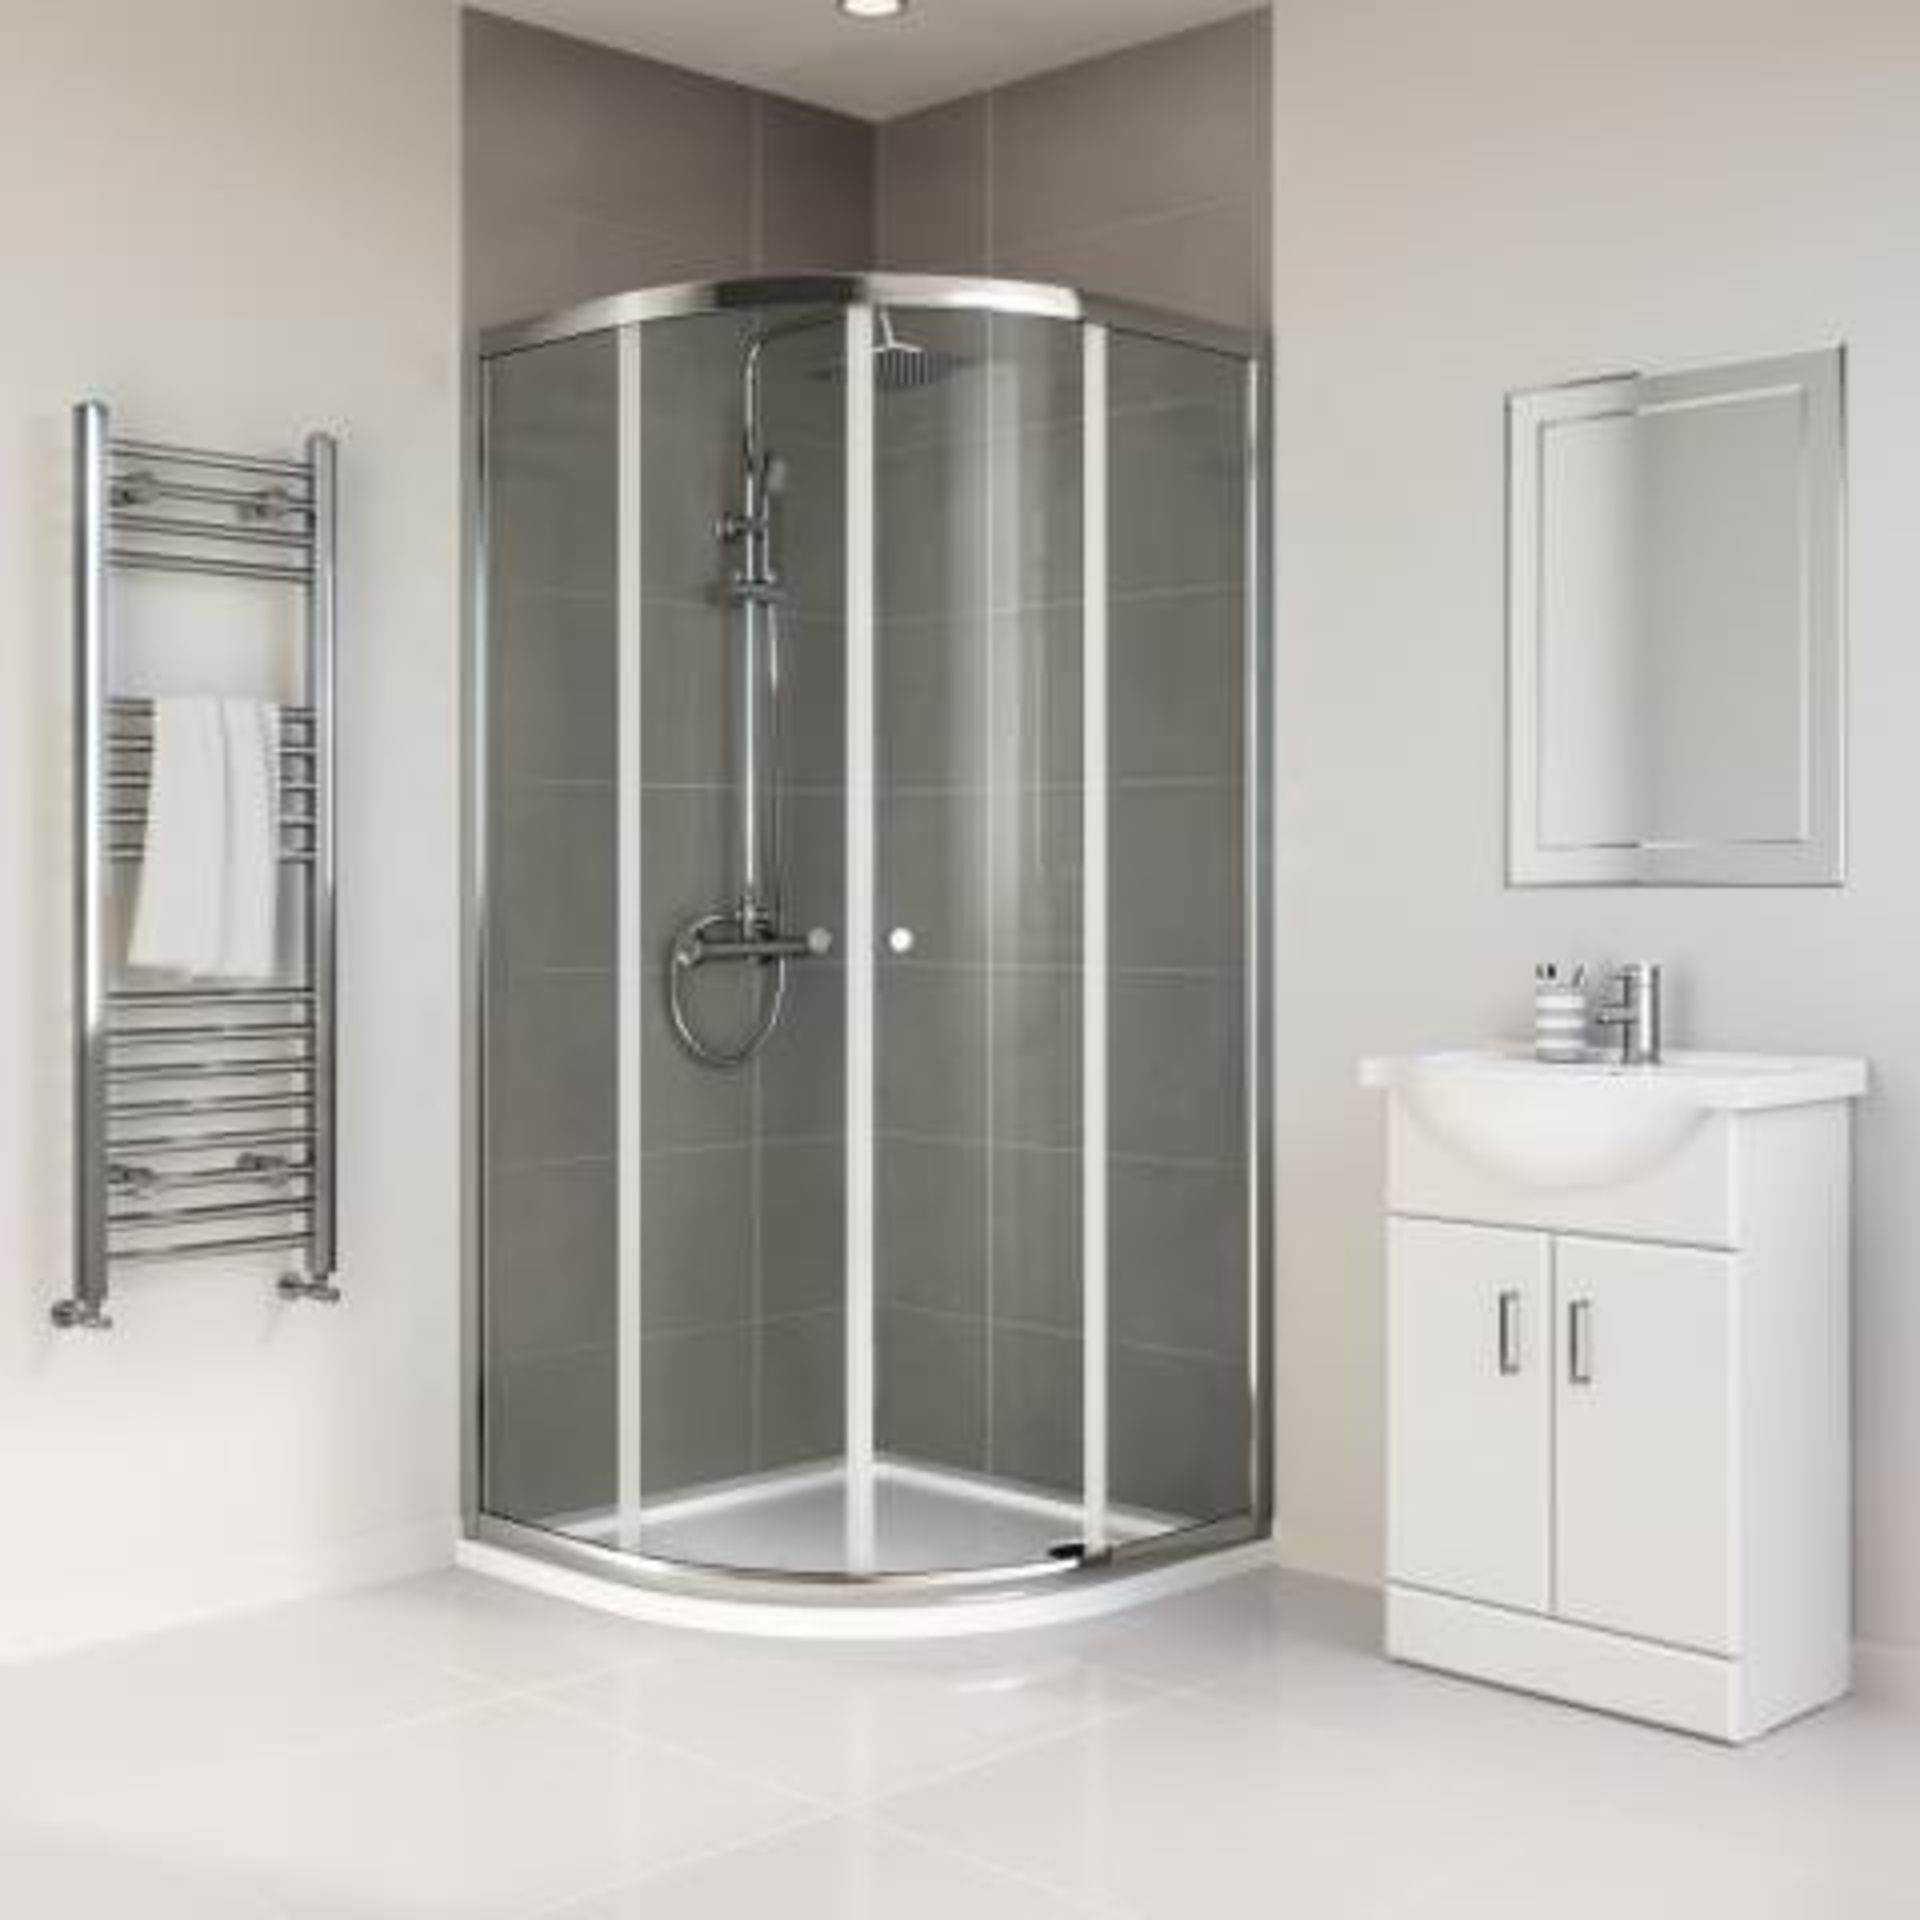 New (Z195) 900x900mm - Elements Quadrant Shower Enclosure. RRP £229.99. Our Entry Level Range... - Image 2 of 2